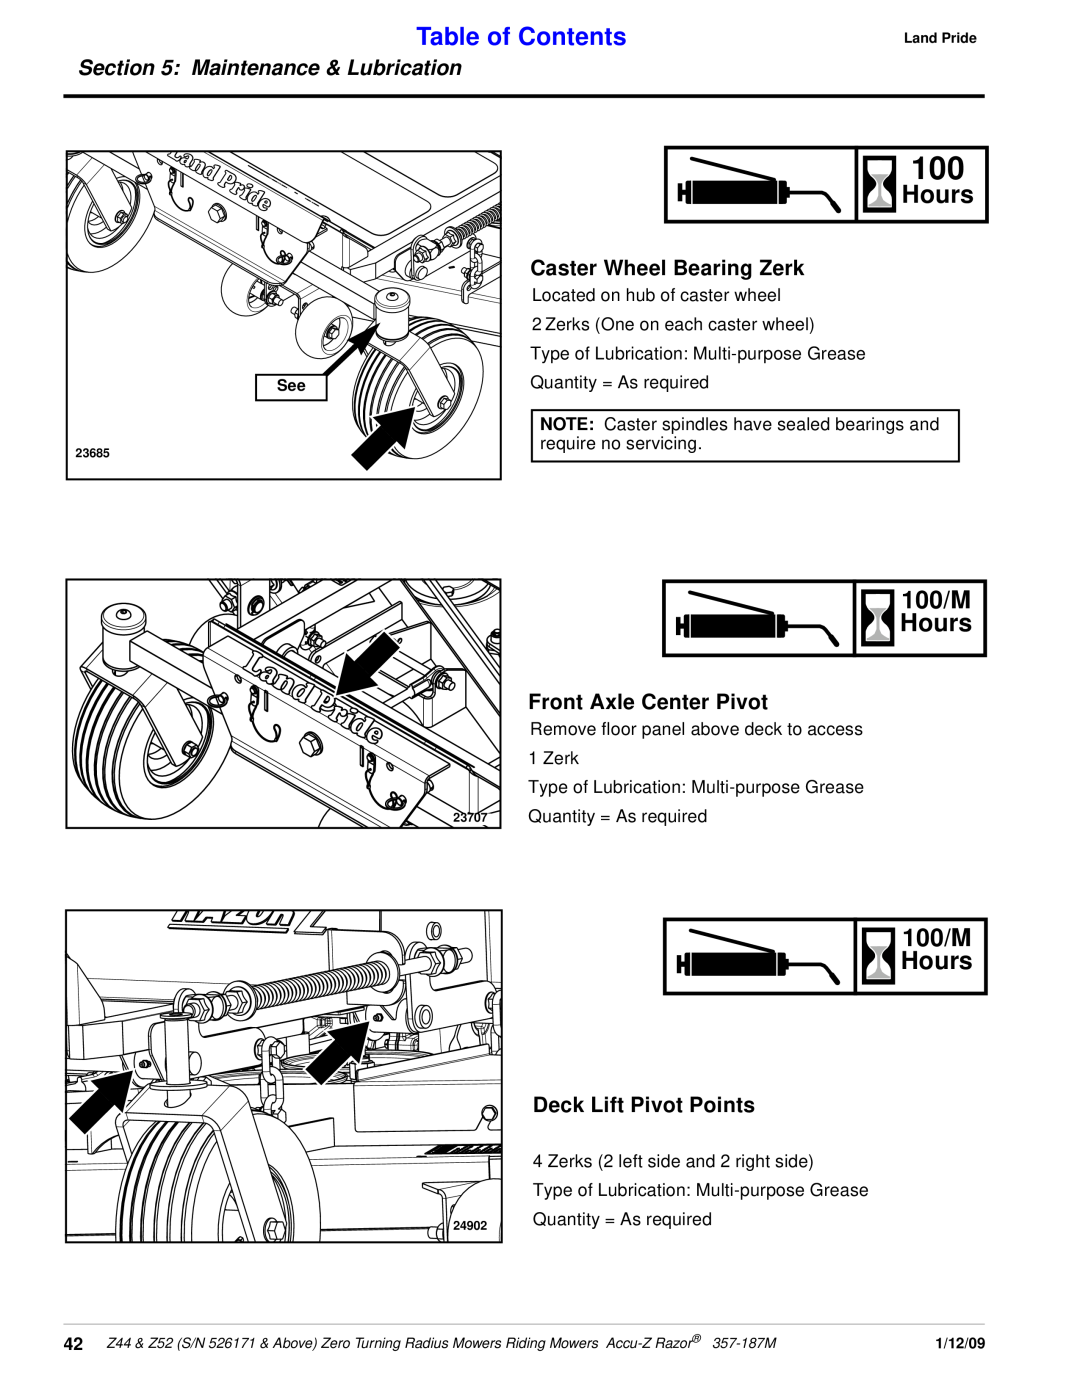 Land Pride 357-187M manual 100/M Hours, Caster Wheel Bearing Zerk, Front Axle Center Pivot, Deck Lift Pivot Points 